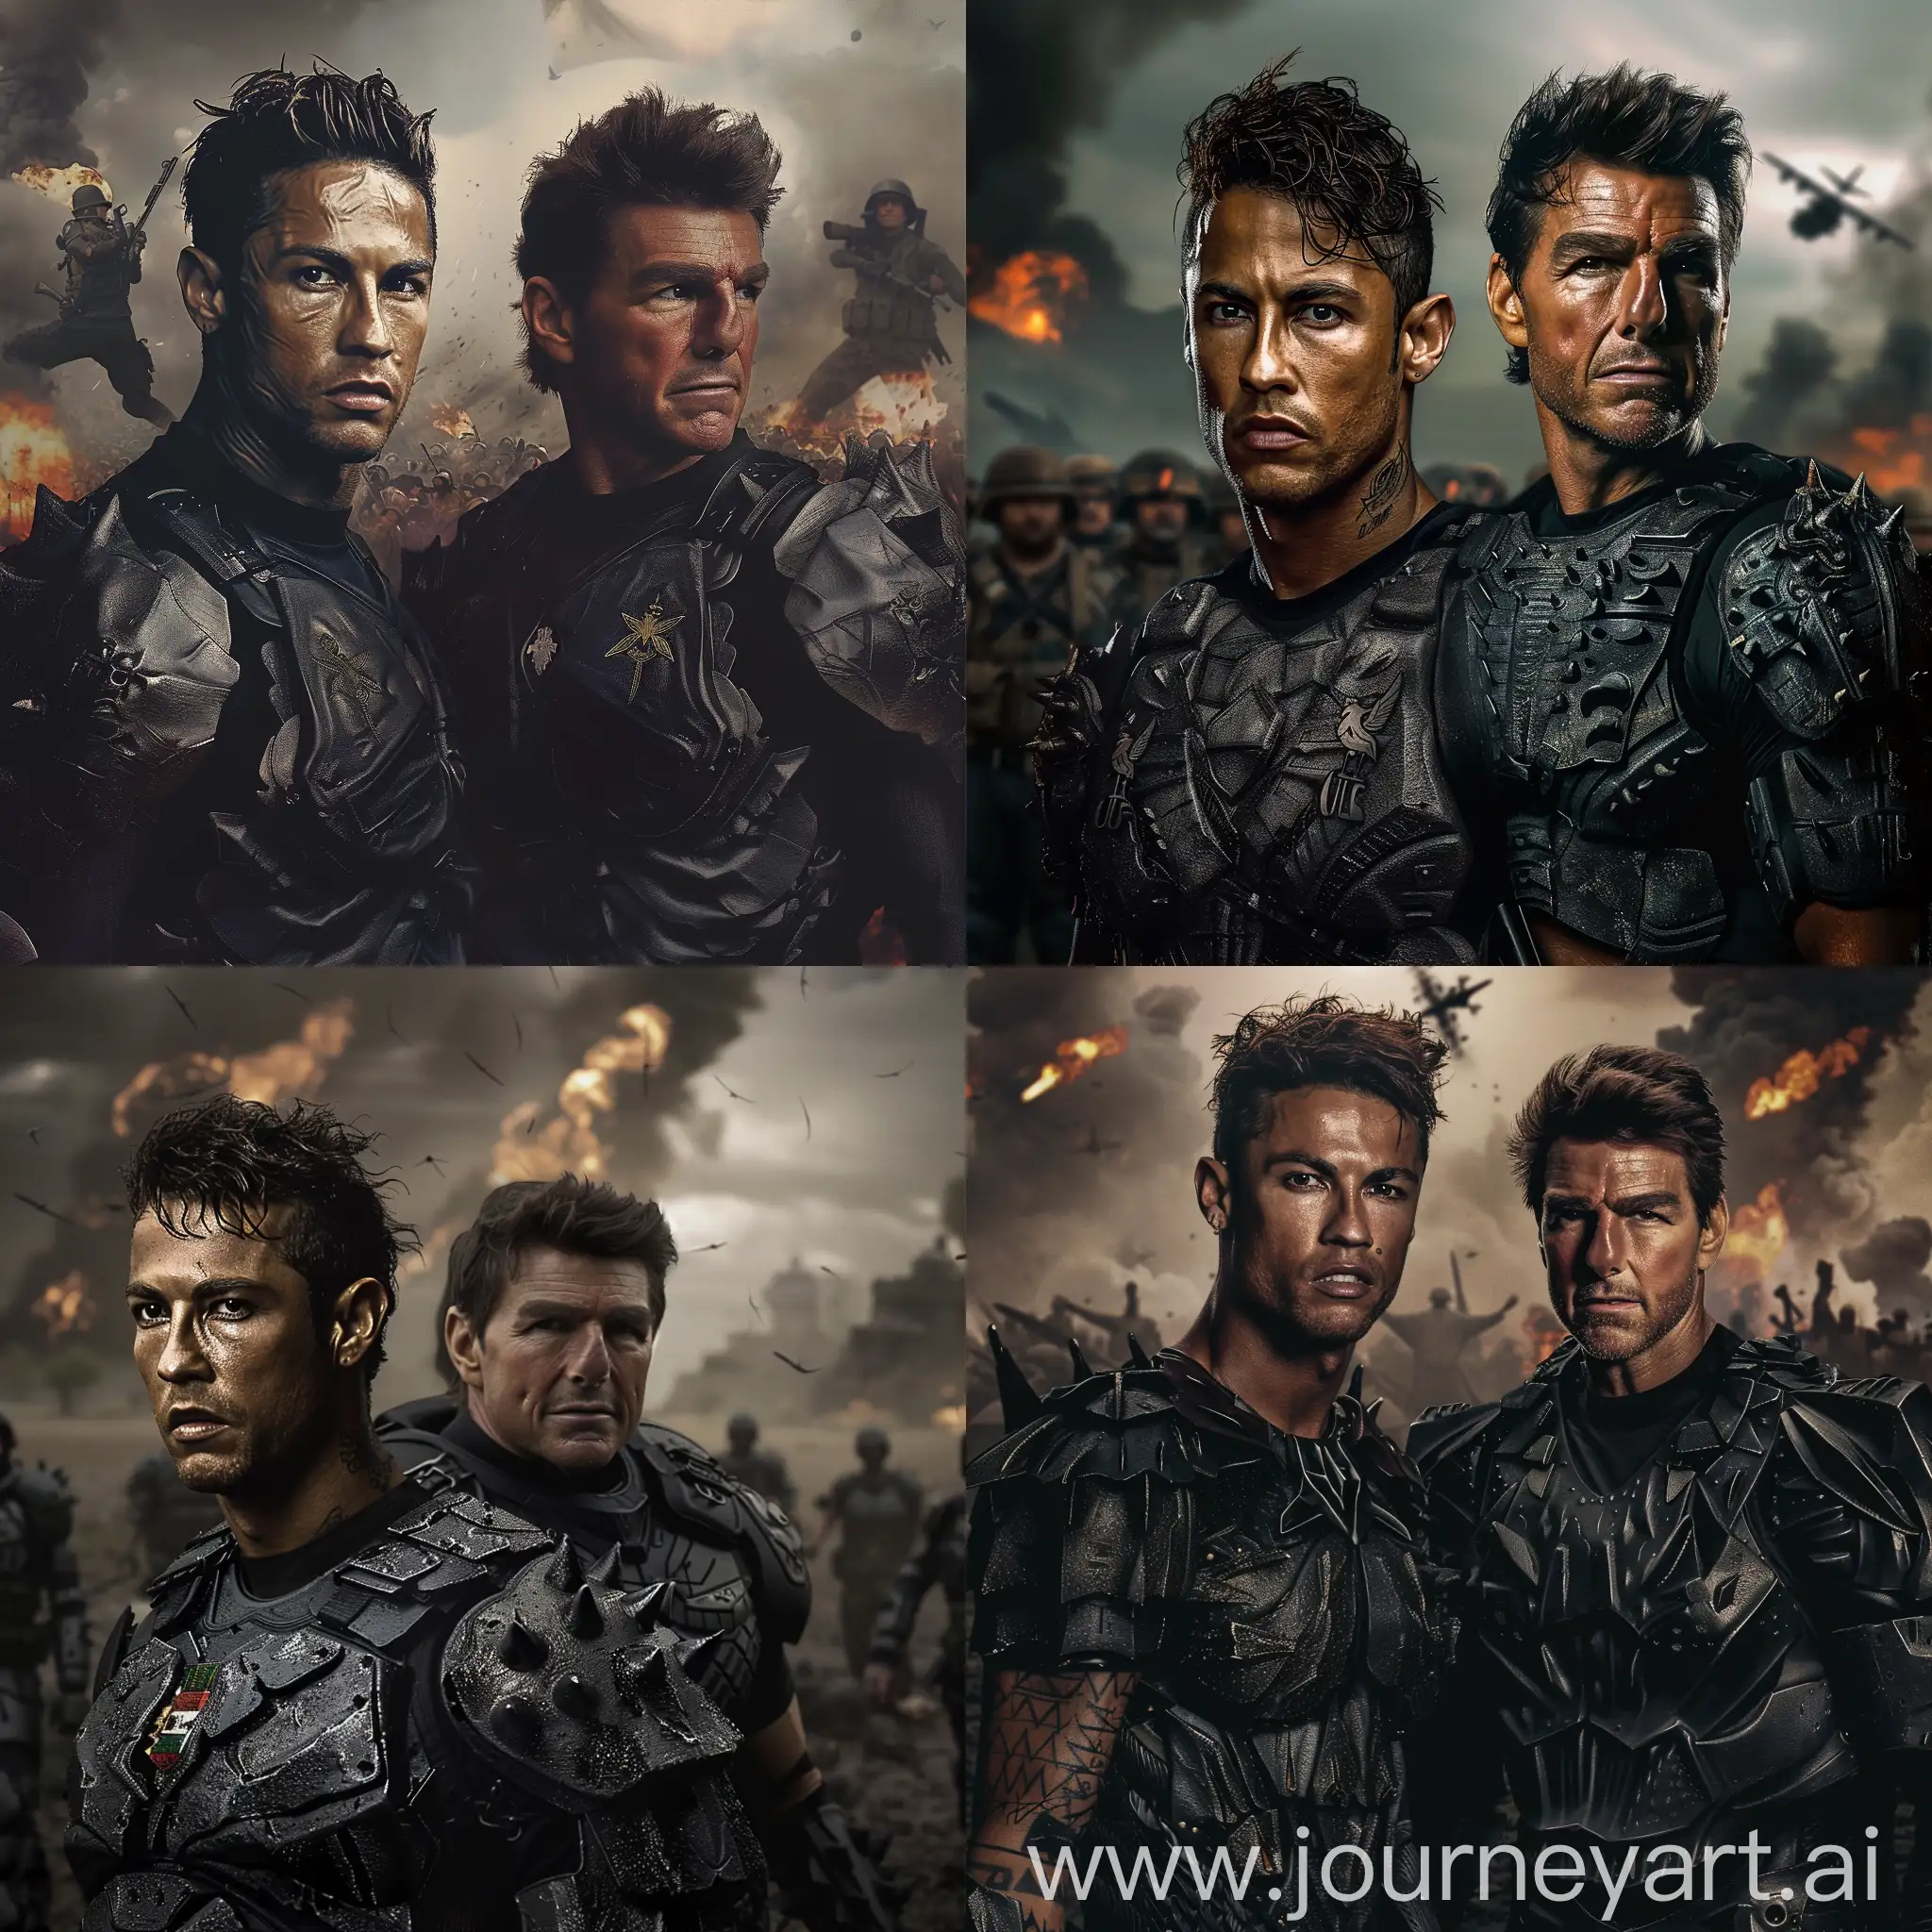 Celebrity-Warriors-Neymar-and-Tom-Cruise-in-Black-Military-Armor-Amidst-War